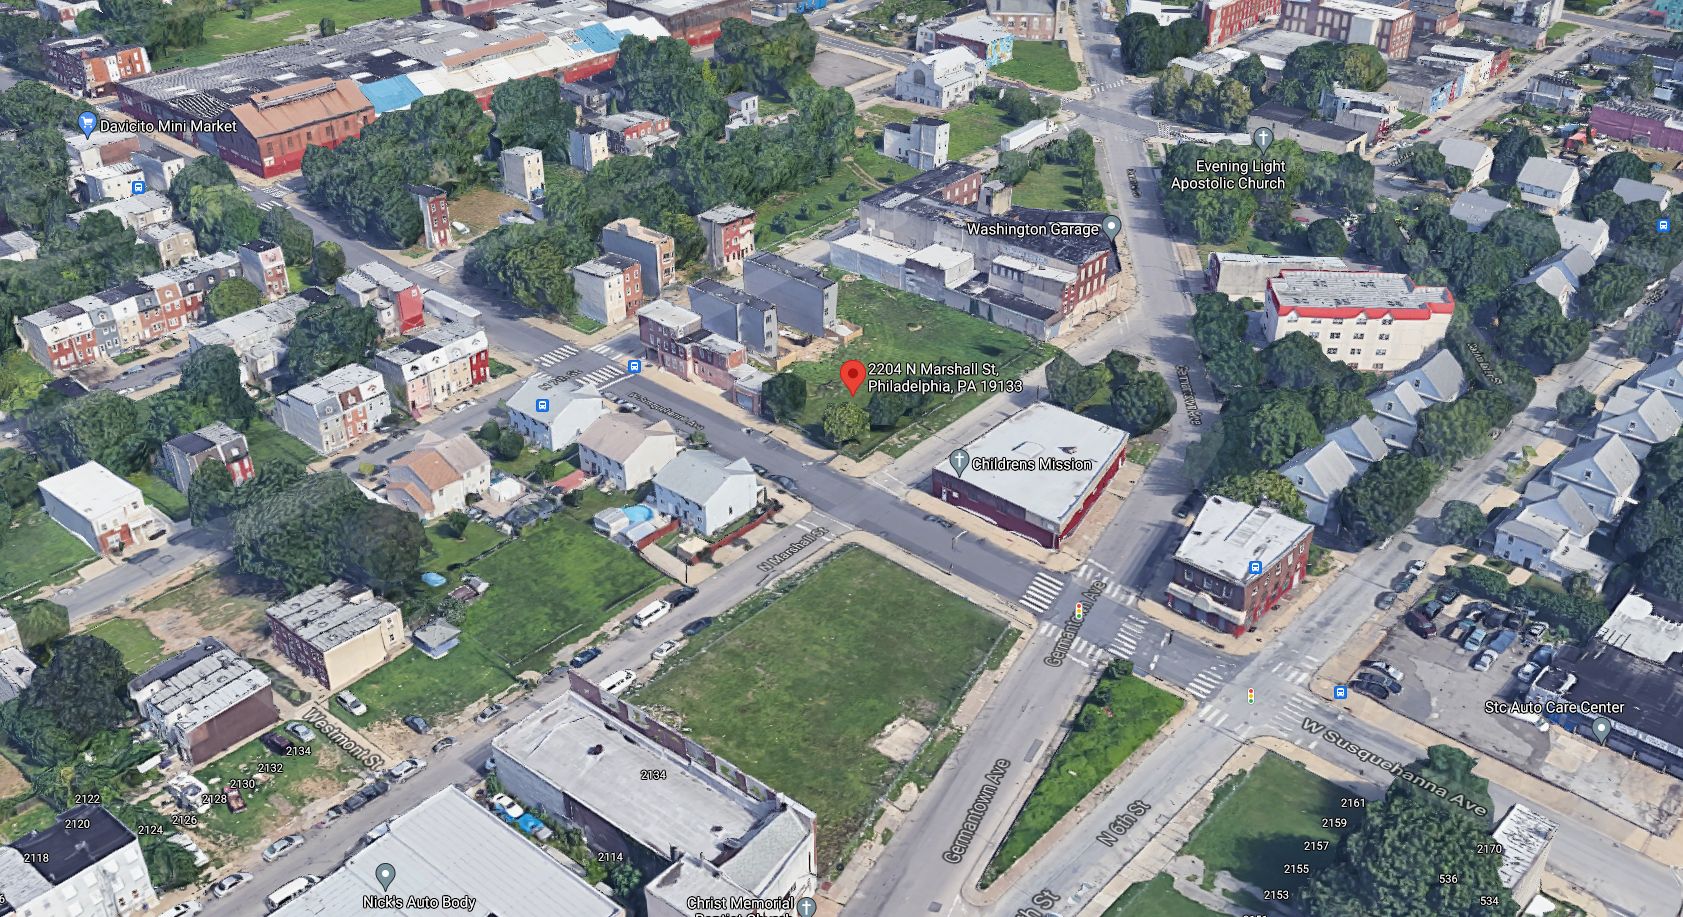 2204 North Marshall Street. Looking northwest. Credit: Google Maps